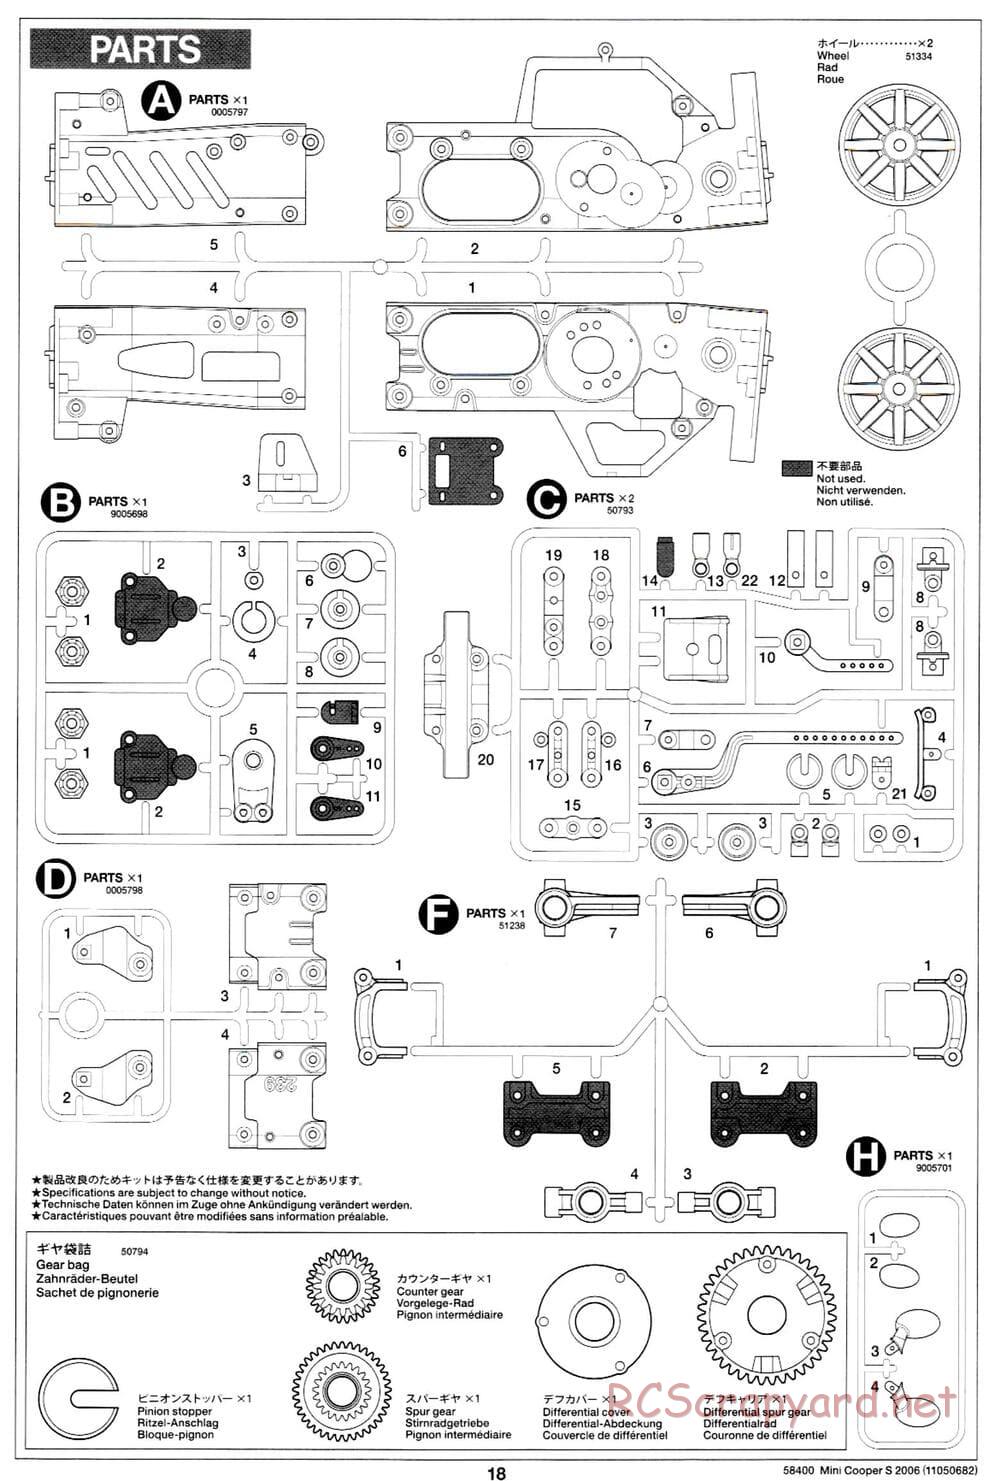 Tamiya - Mini Cooper S 2006 - M03L Chassis - Manual - Page 18